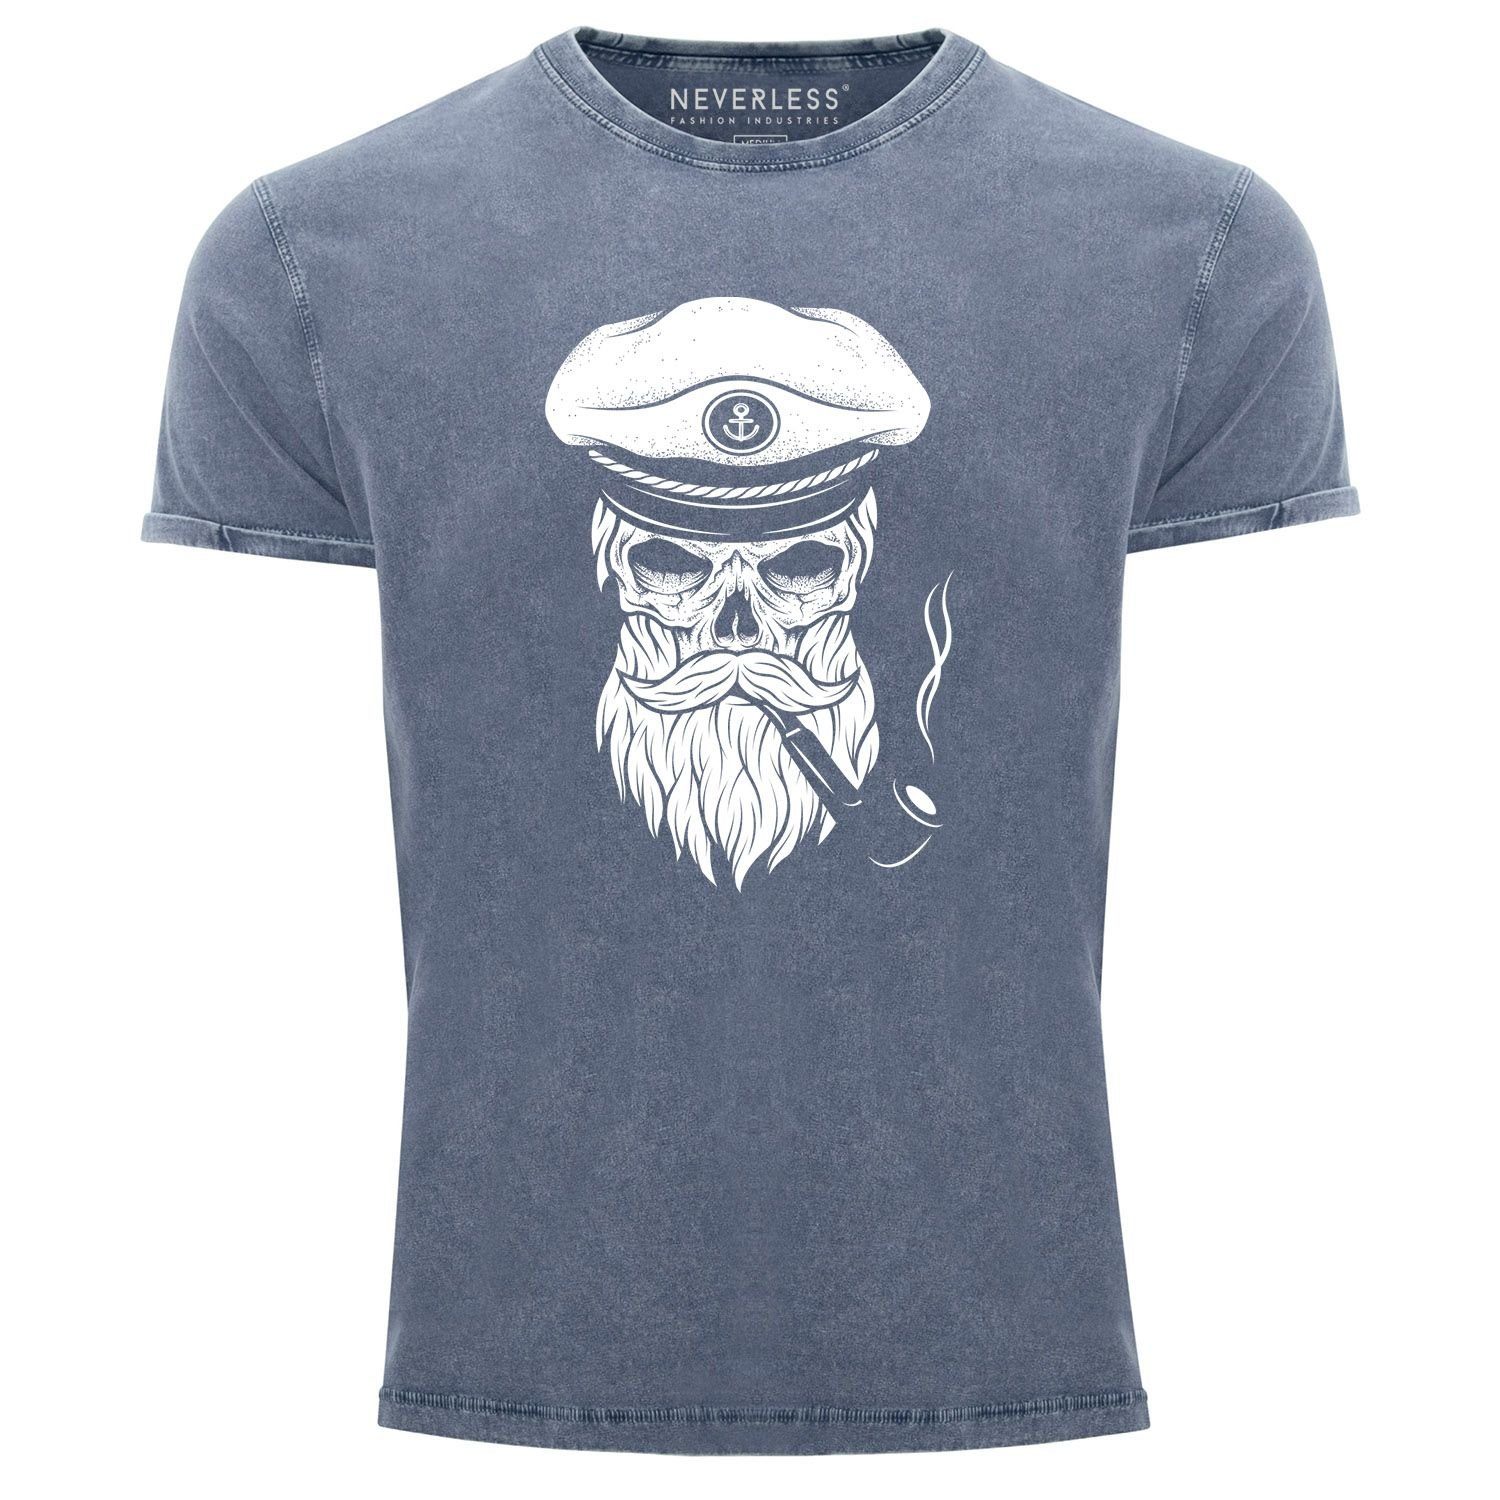 Neverless Print-Shirt Cooles Angesagtes Herren T-Shirt Vintage Shirt Captain Skull Totenkopf Aufdruck Used Look Slim Fit Neverless® mit Print blau